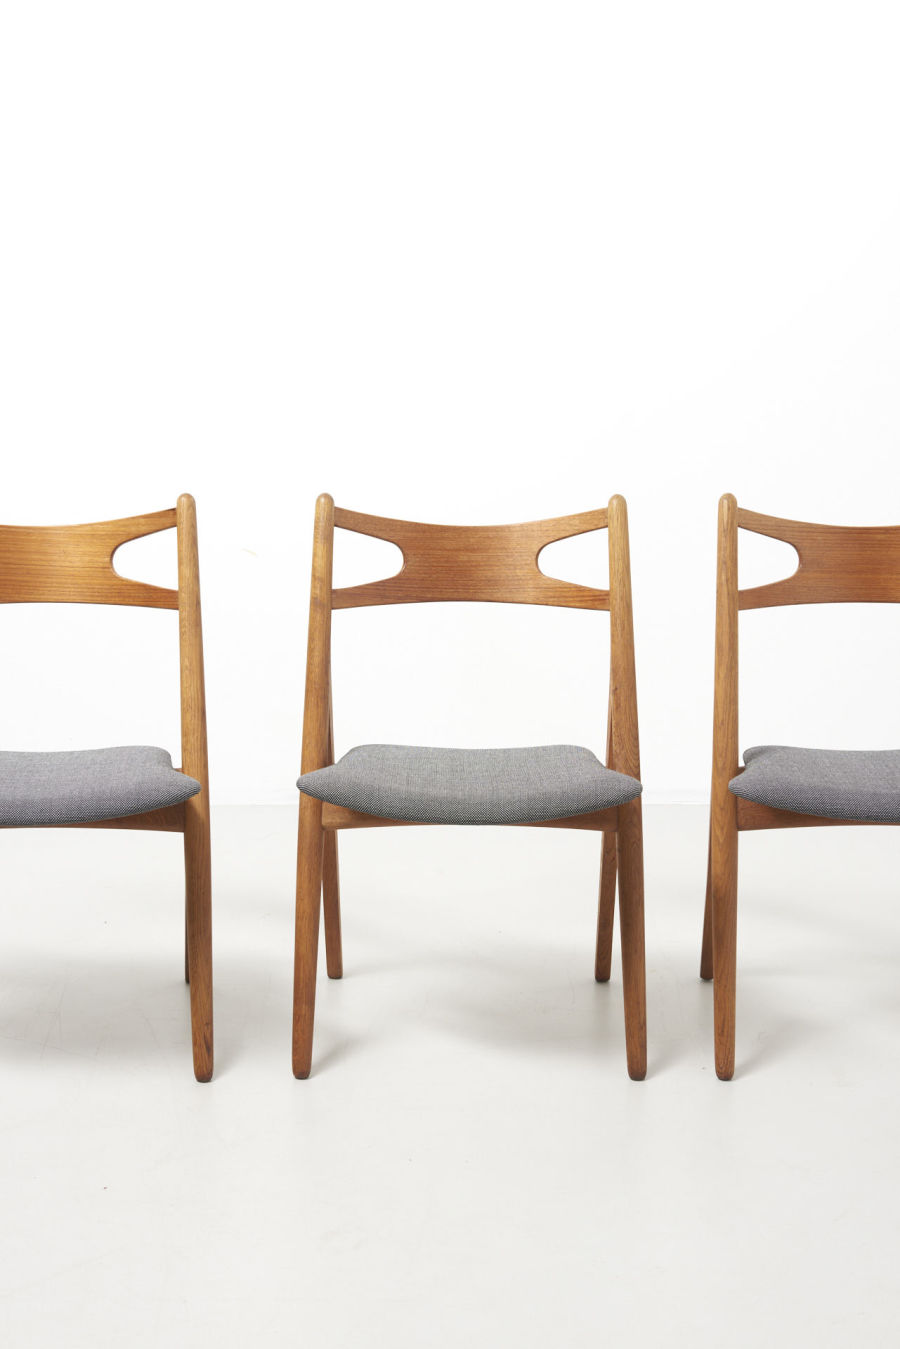 modestfurniture-vintage-2131-hans-wegner-sawbuck-chairs-ch-2902